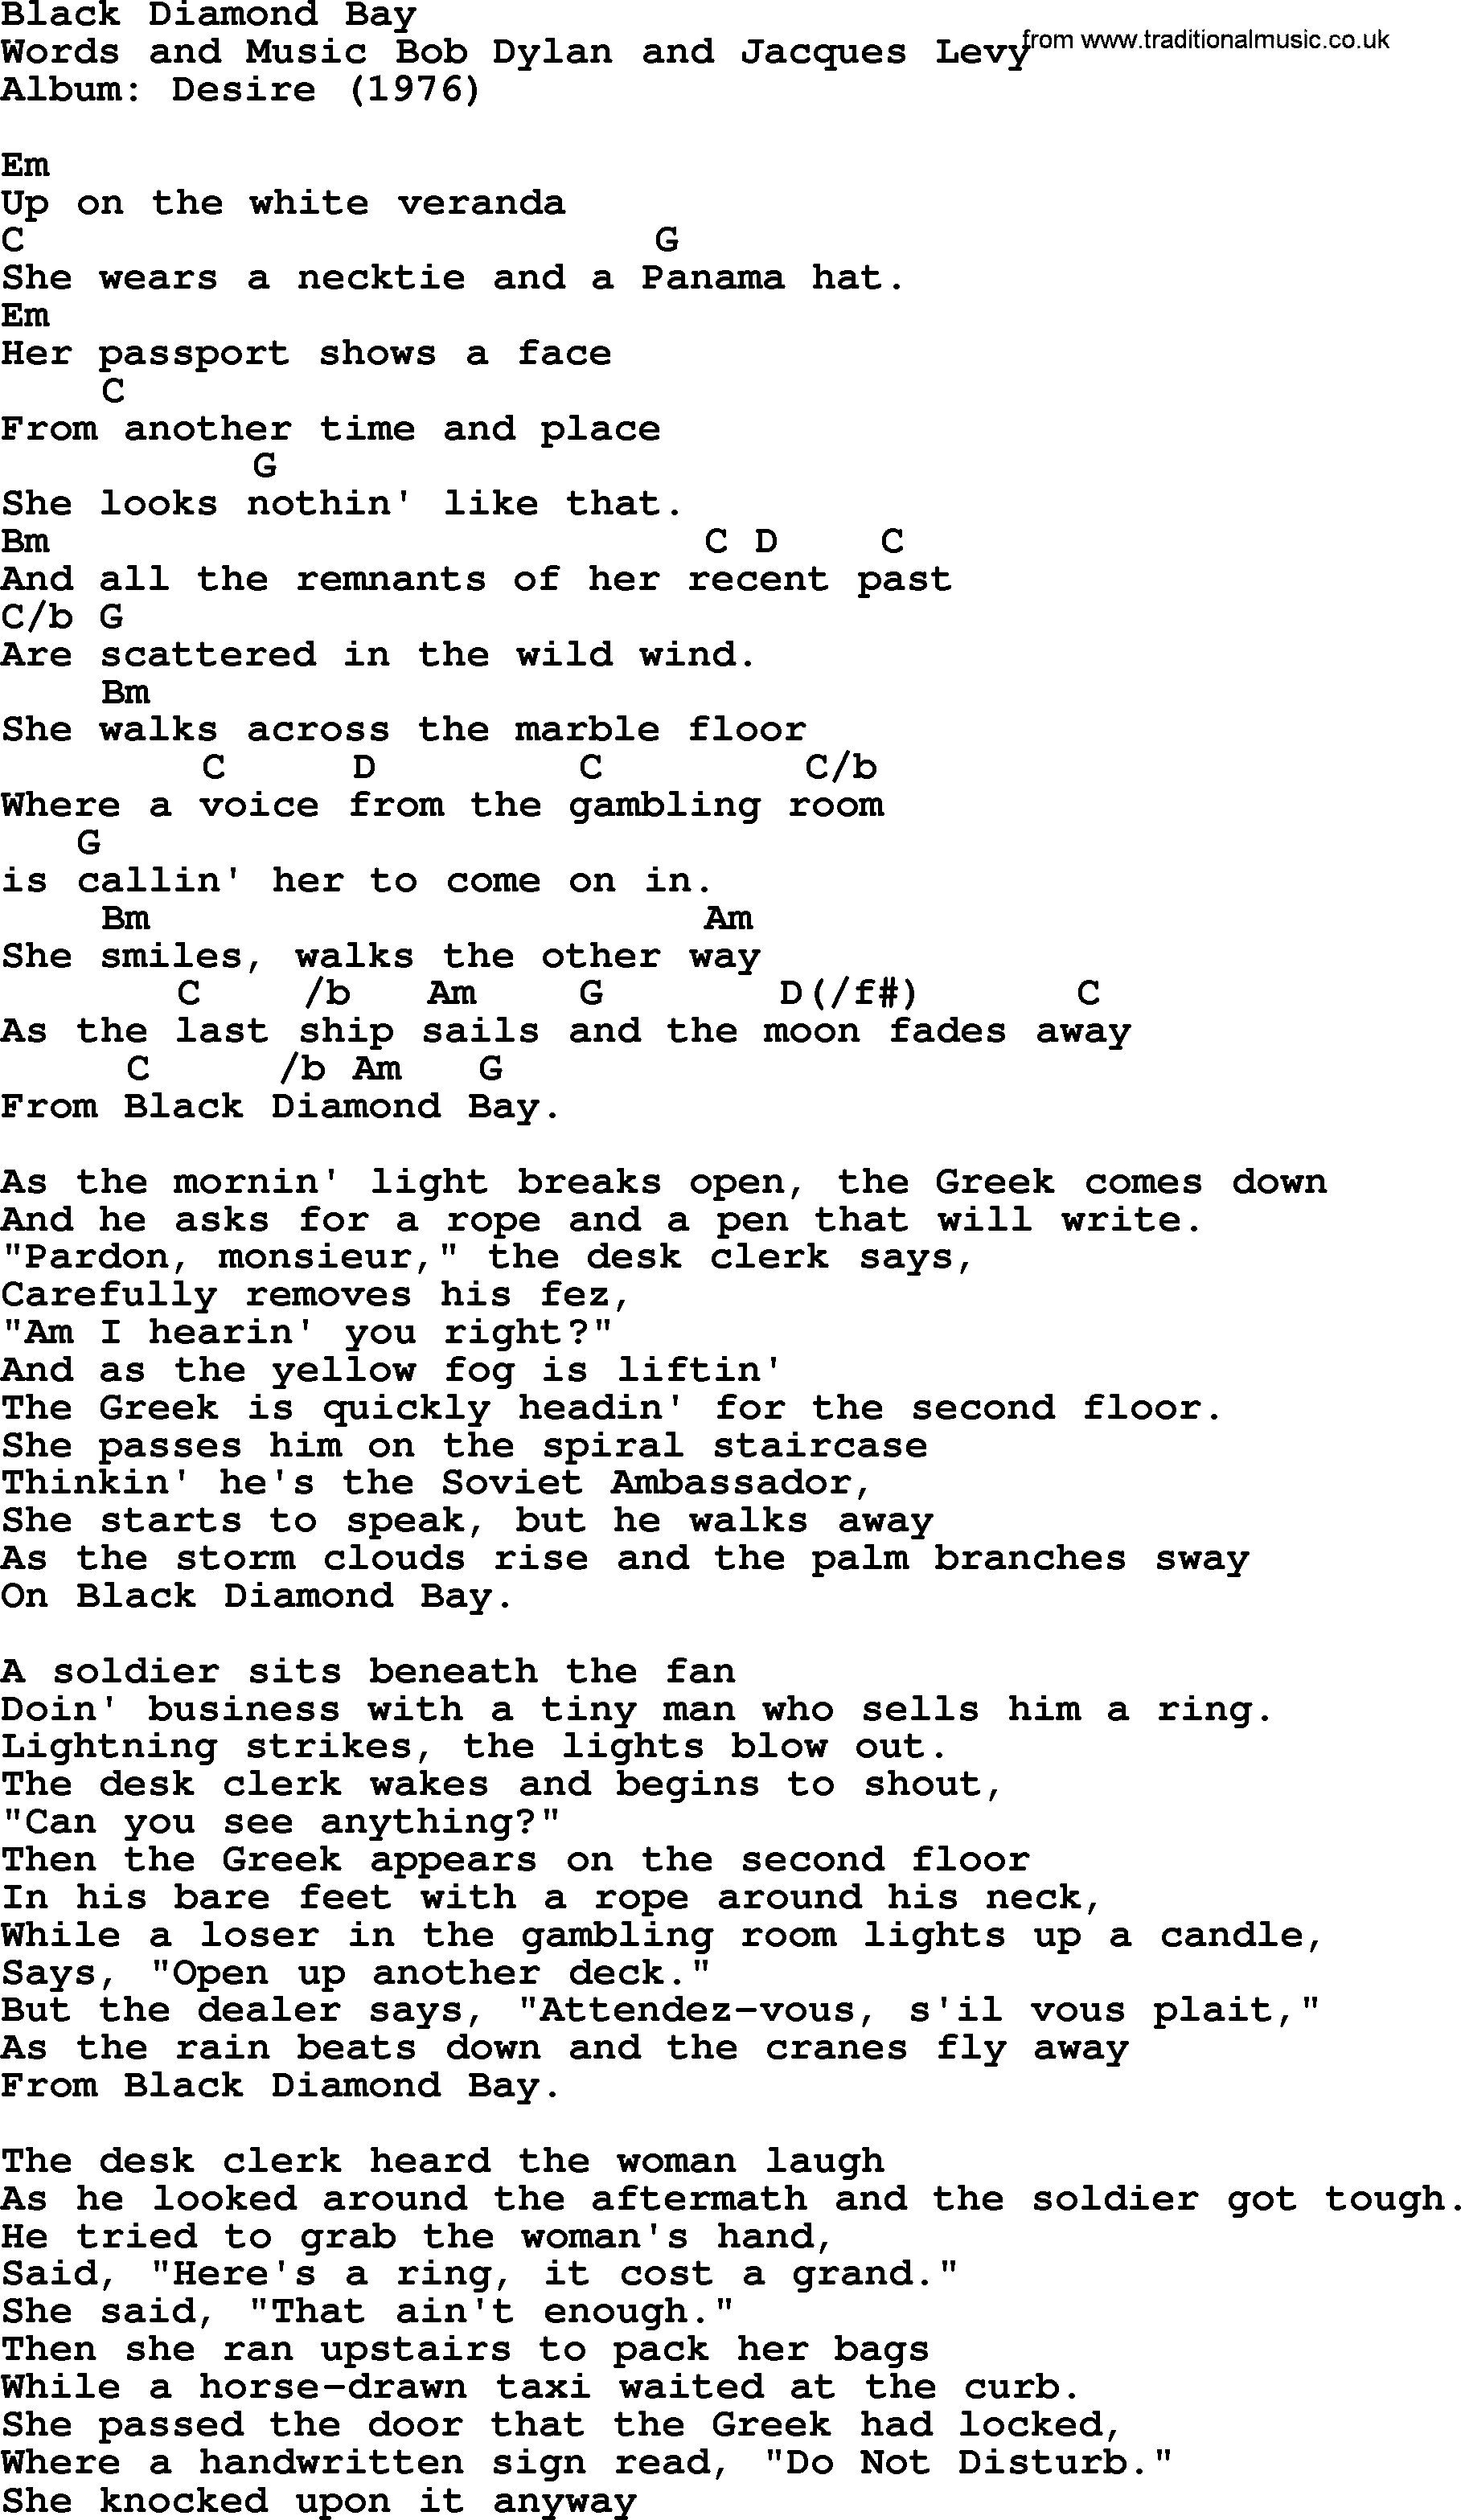 Bob Dylan song, lyrics with chords - Black Diamond Bay